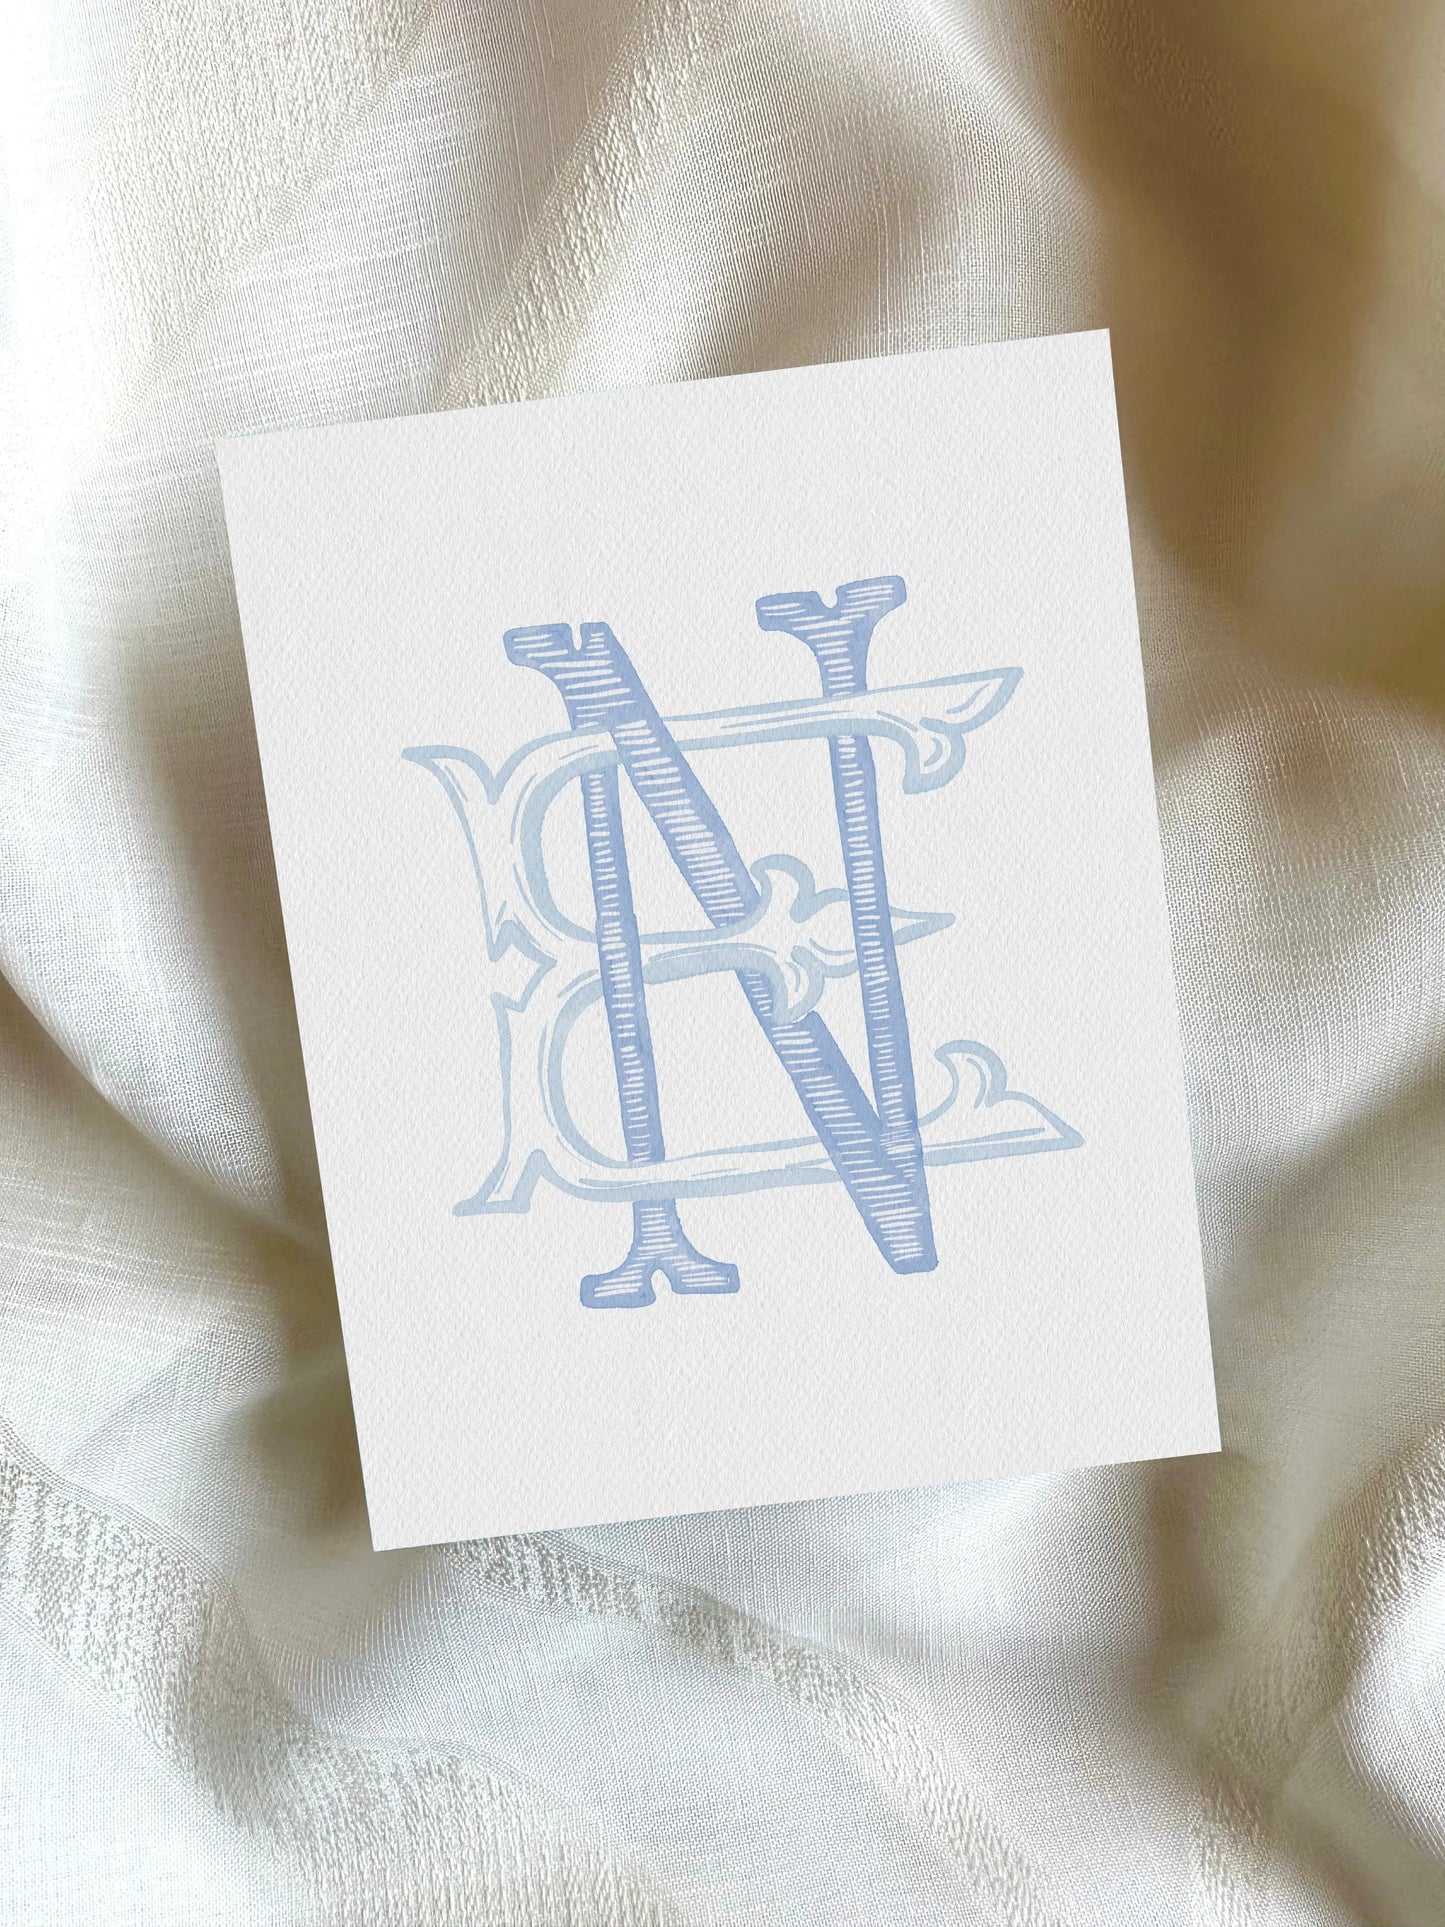 2 Letter Monogram with Letters NE | Digital Download - Wedding Monogram SVG, Personal Logo, Wedding Logo for Wedding Invitations The Wedding Crest Lab